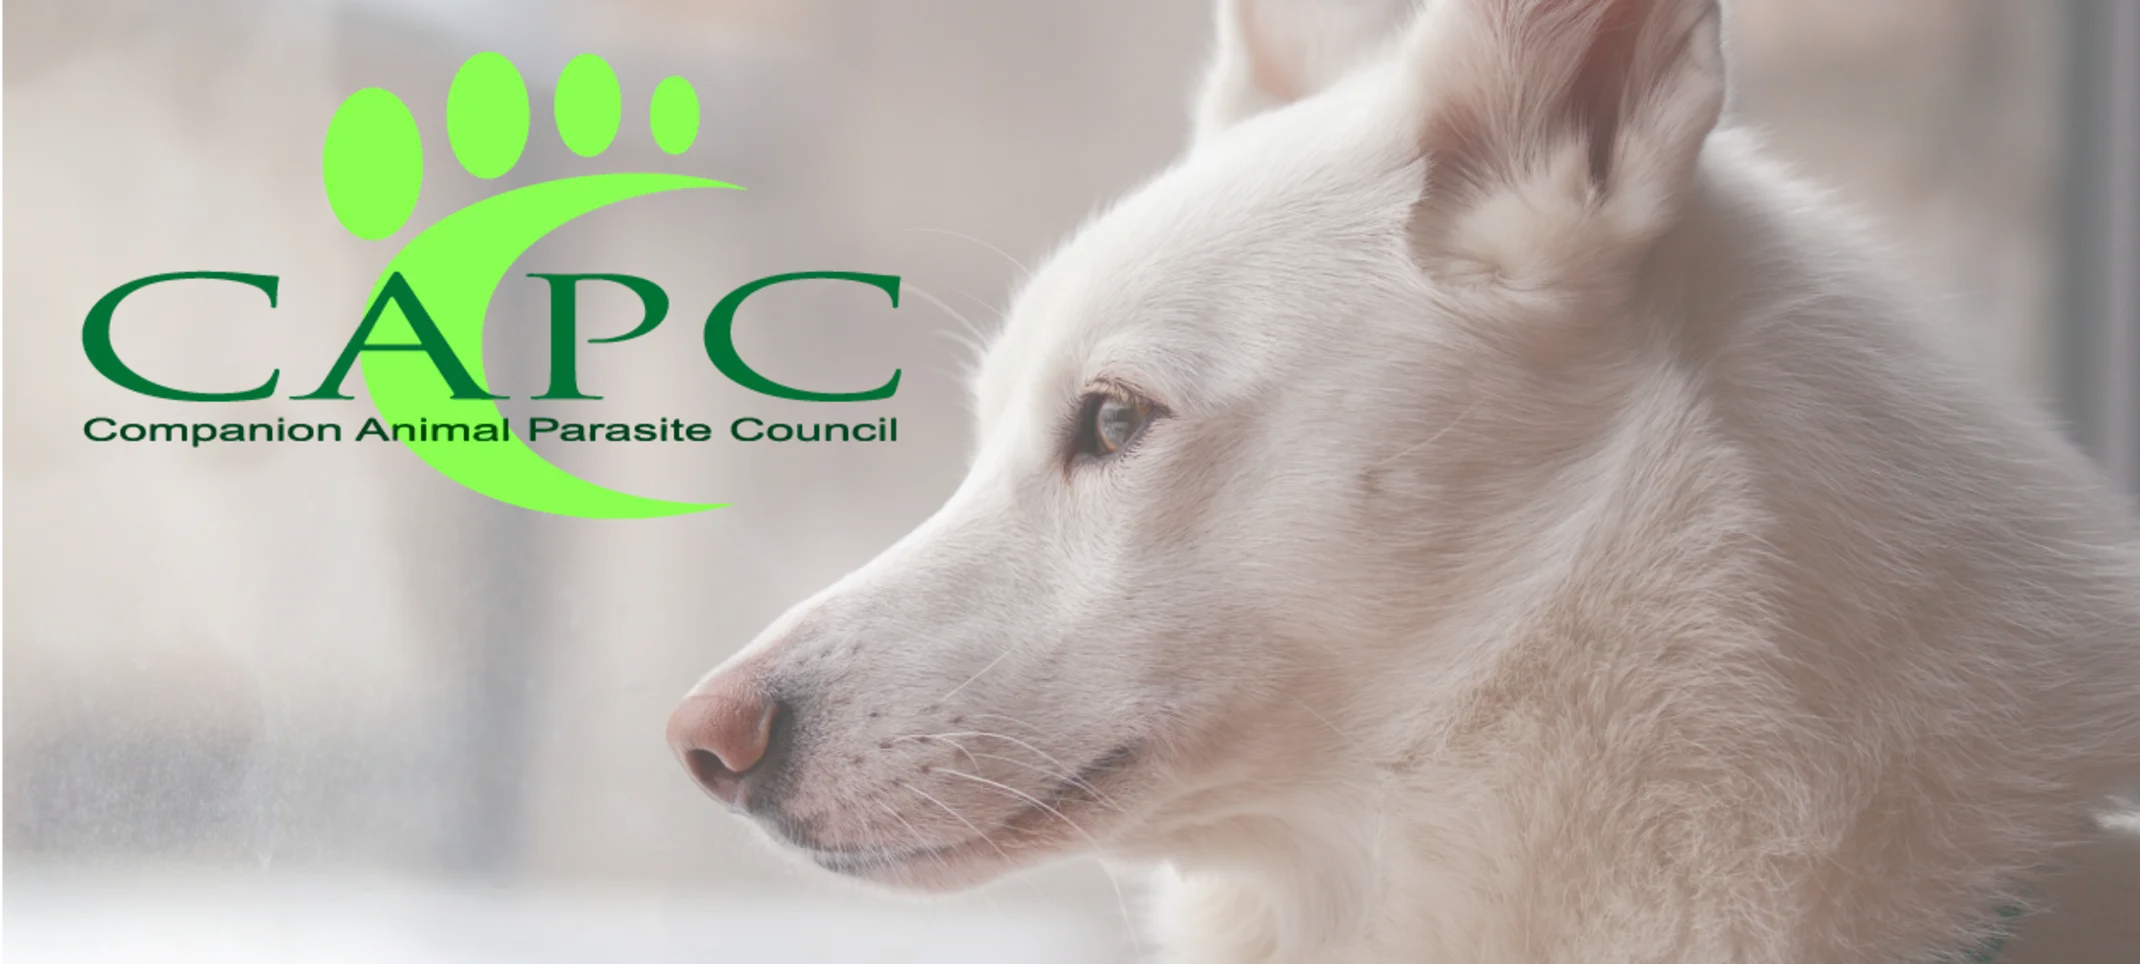 Companion Animal Parasite Council (CAPC)